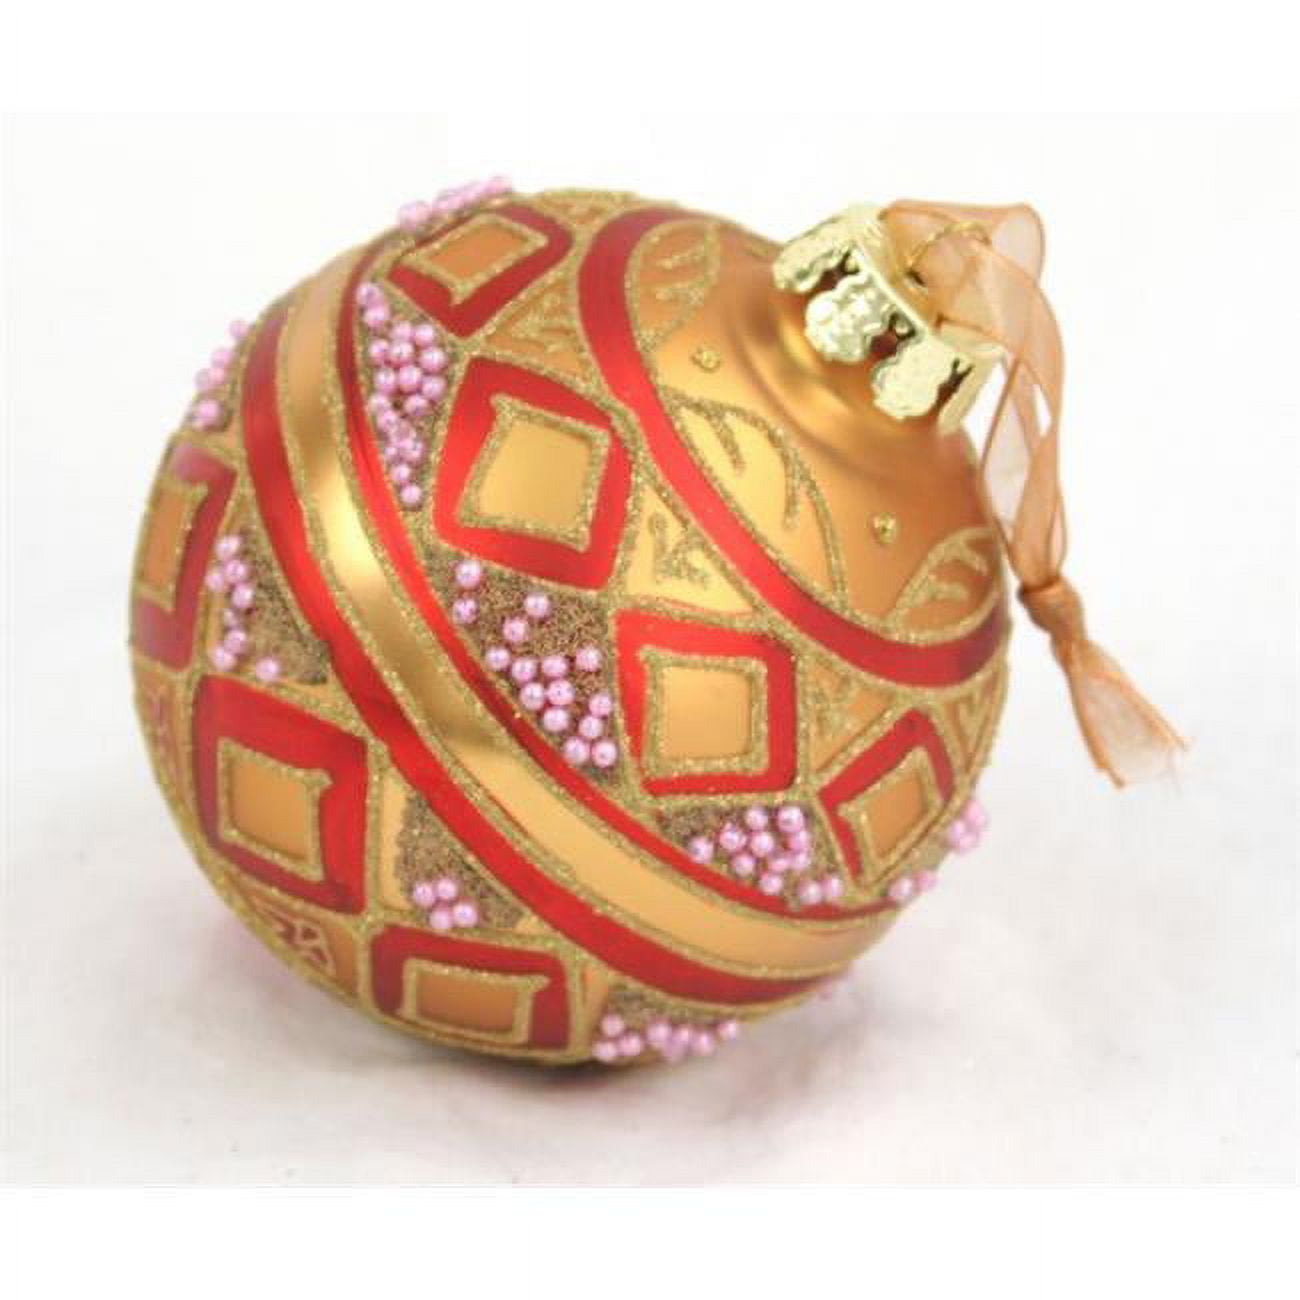 Distinctive Designs Xo-576 100 Mm Hand Painted Glass Ball Ornament, Burgundy & Gold